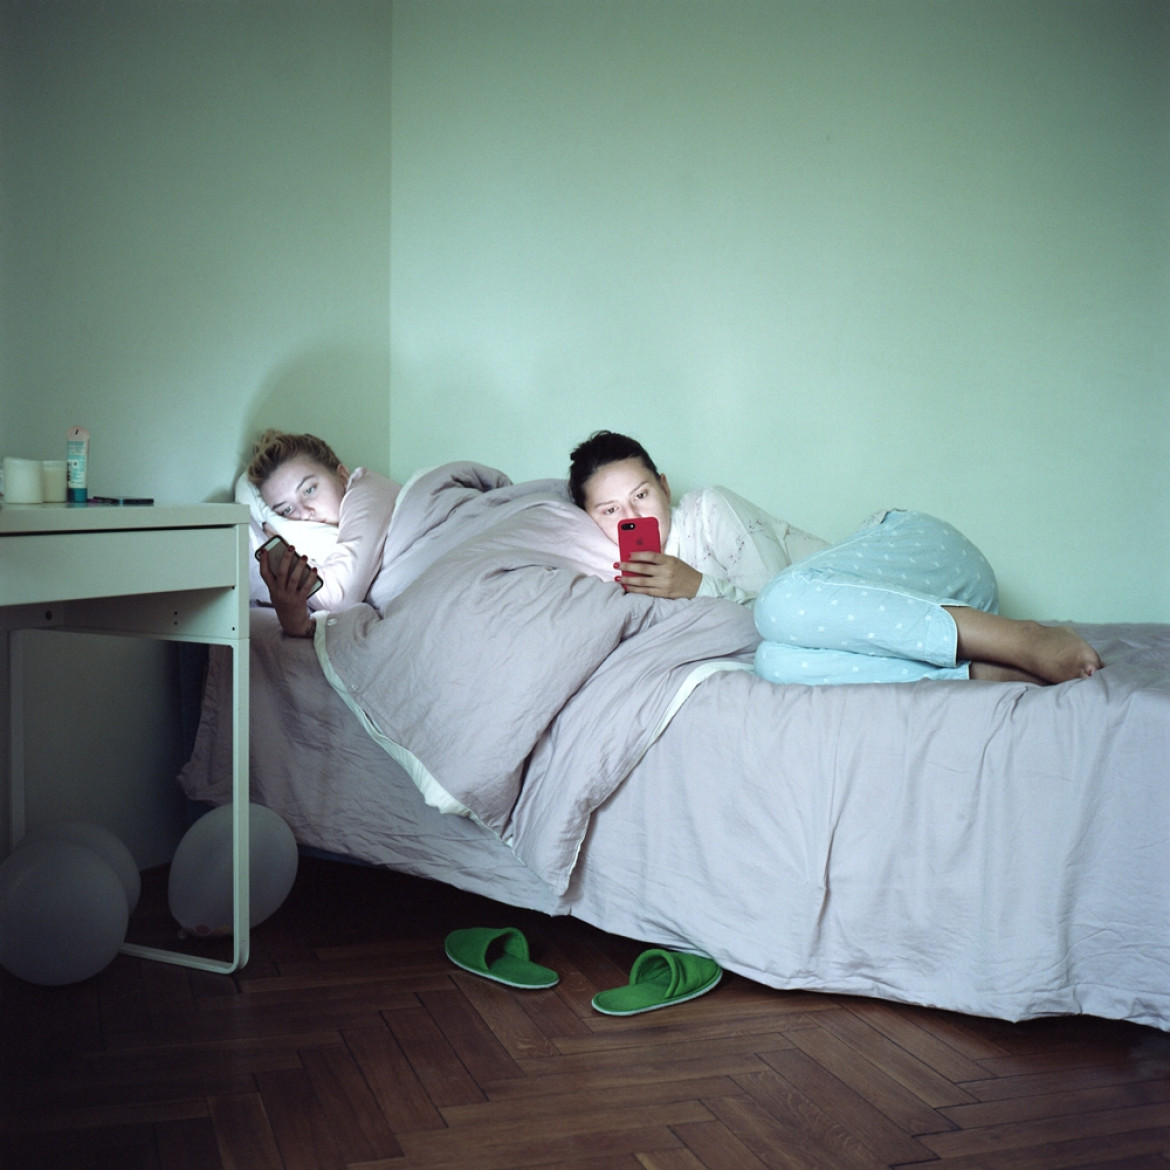 fot. Alena Kakhanovich, "Communication", 3. Miejsce w kat. Analog: Portrait / IPA 2020